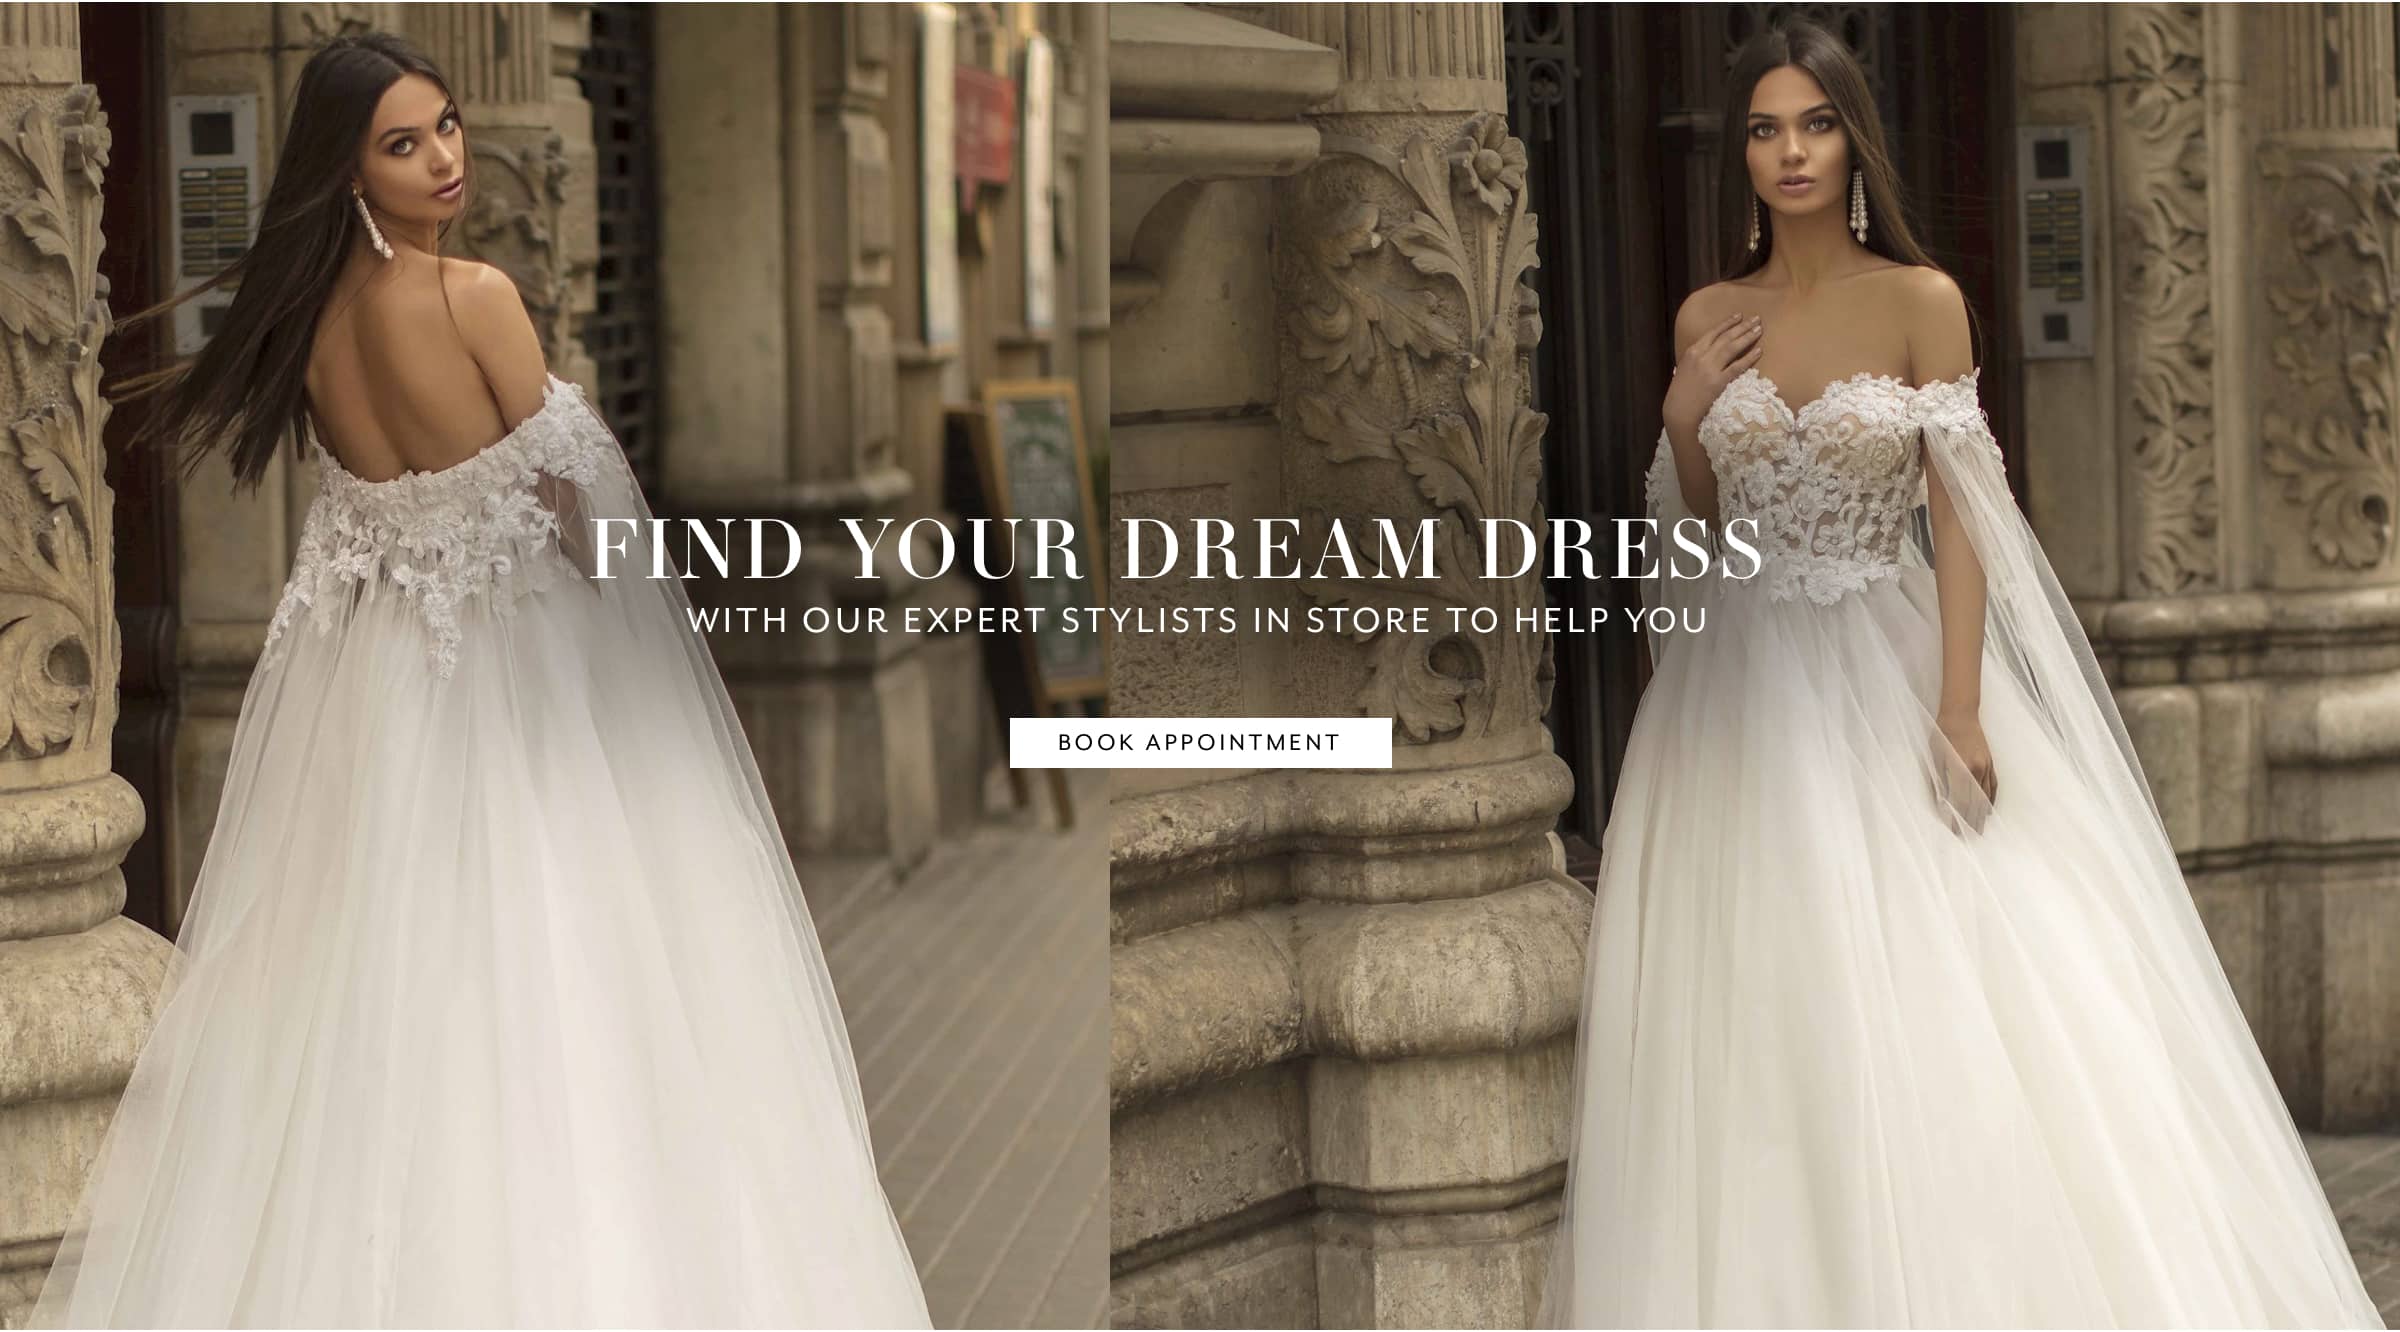 Bridal dresses at Signature Dresses located in North West Washington, DC. Desktop image.